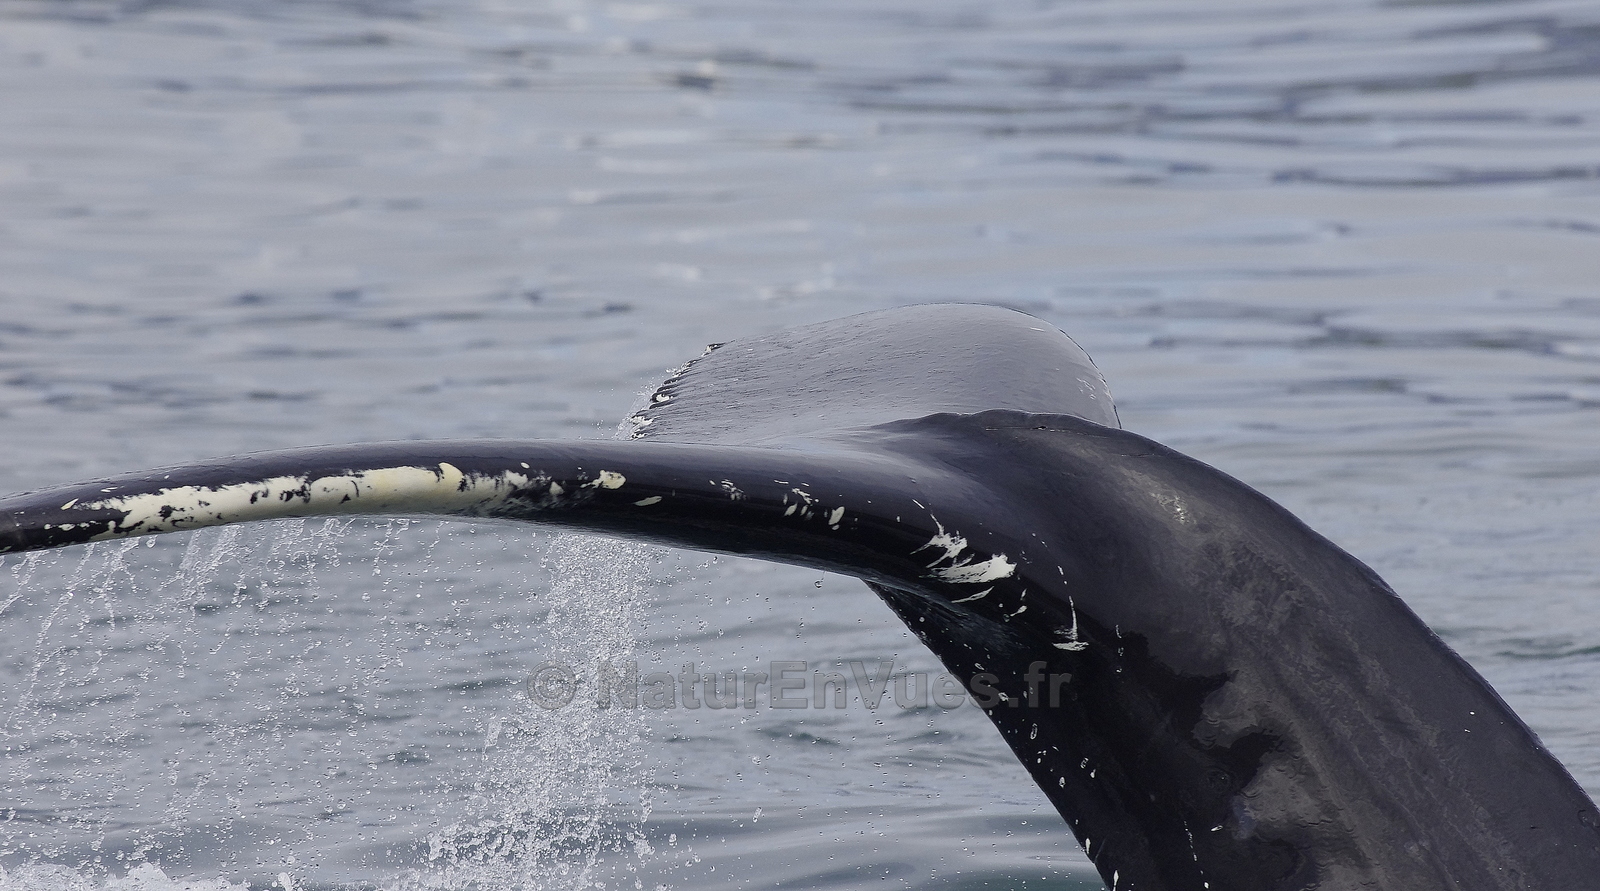 Baleine à bosses (Islande) 